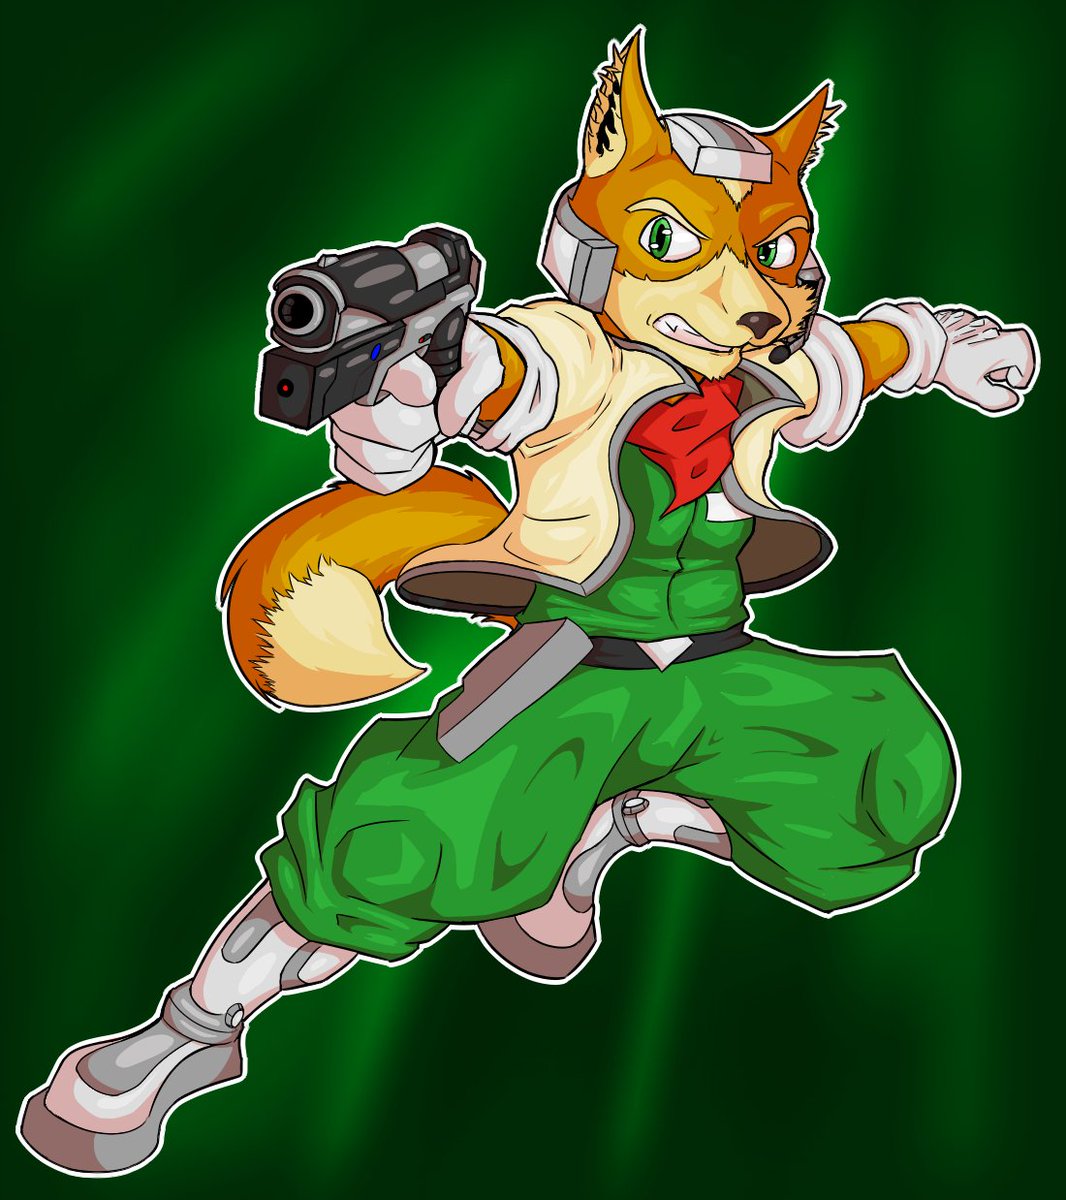 FOX MCCLOUD BABYYYYYYYYYYYYY
He do be pointin' a gun at ya
🔫🦊👍
#drawing #doodle #starfox #supersmashbrosmelee #foxmccloud